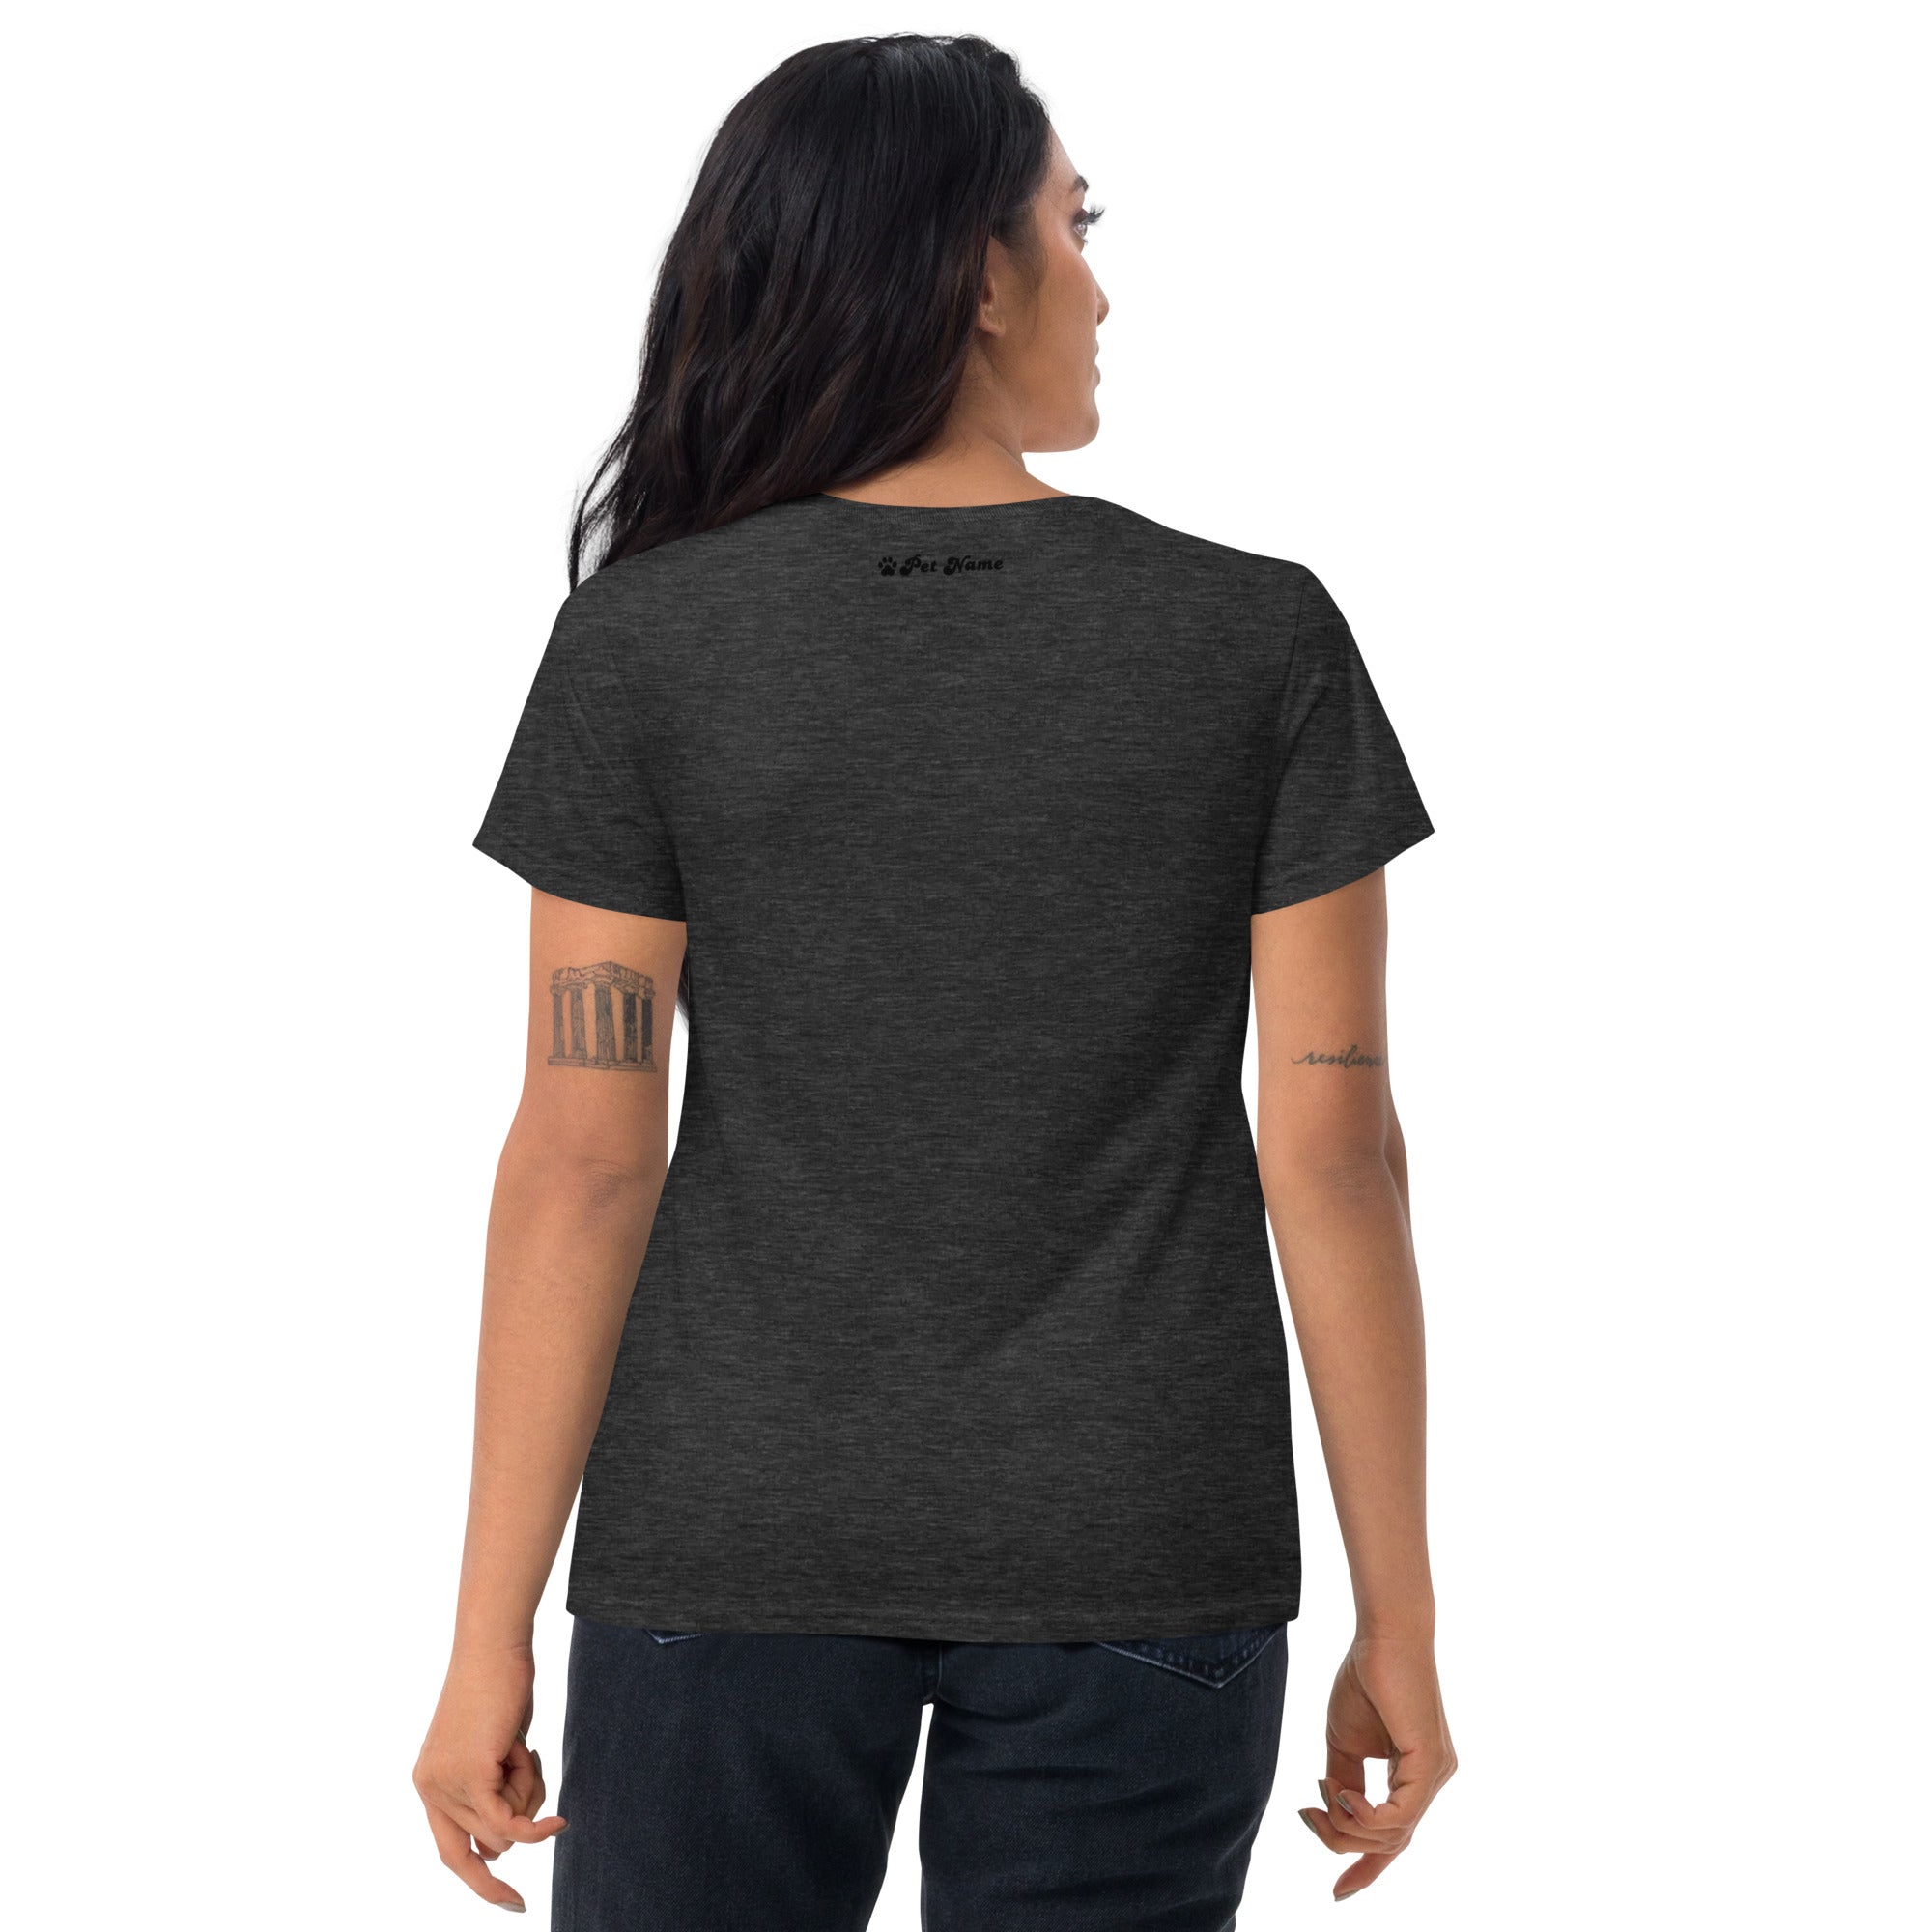 American Field Spaniel Women's short sleeve t-shirt